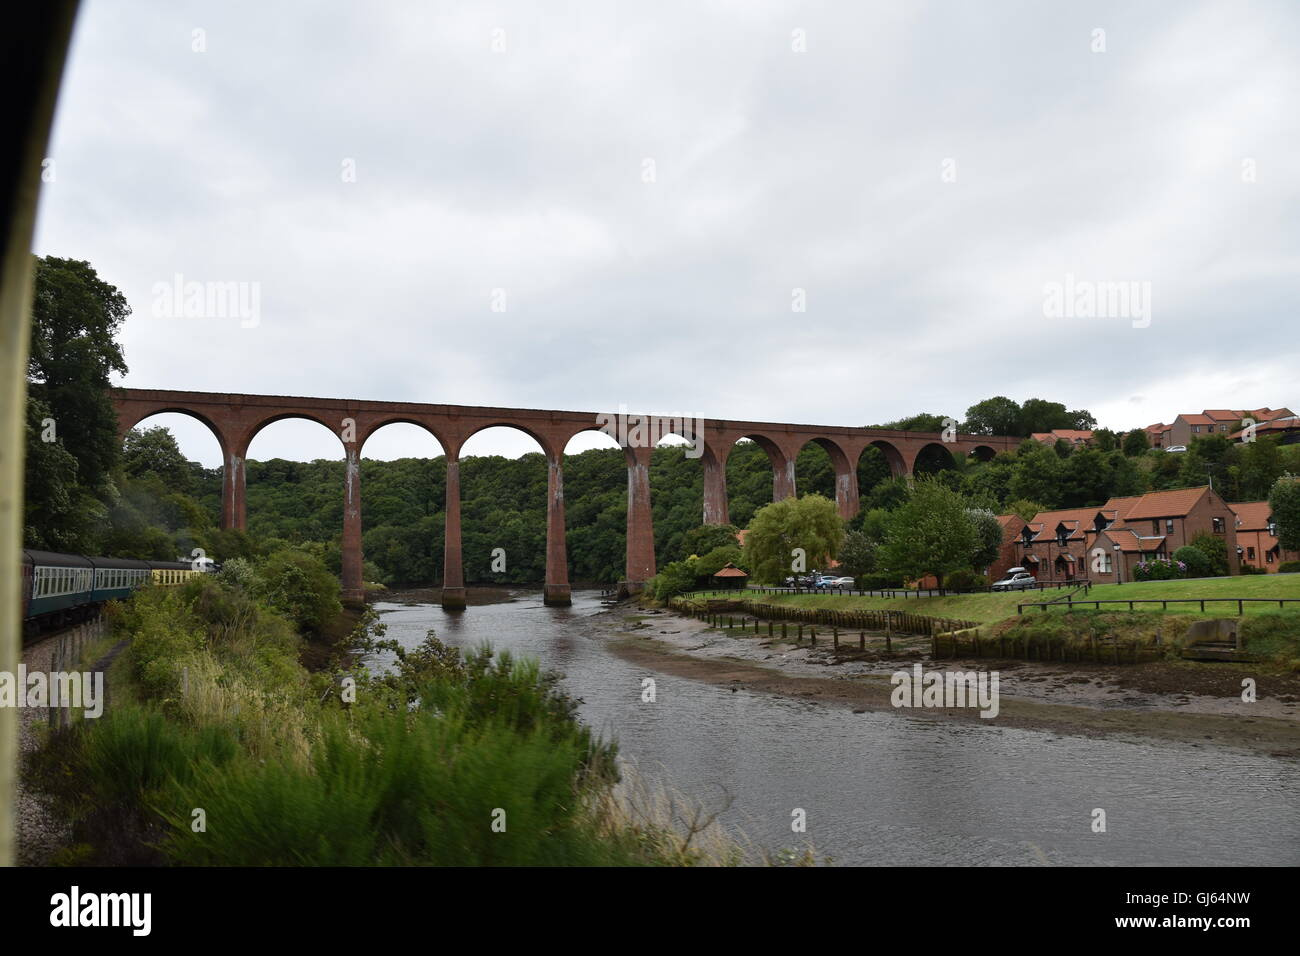 North Yorkshire moors railway viaduct Stock Photo